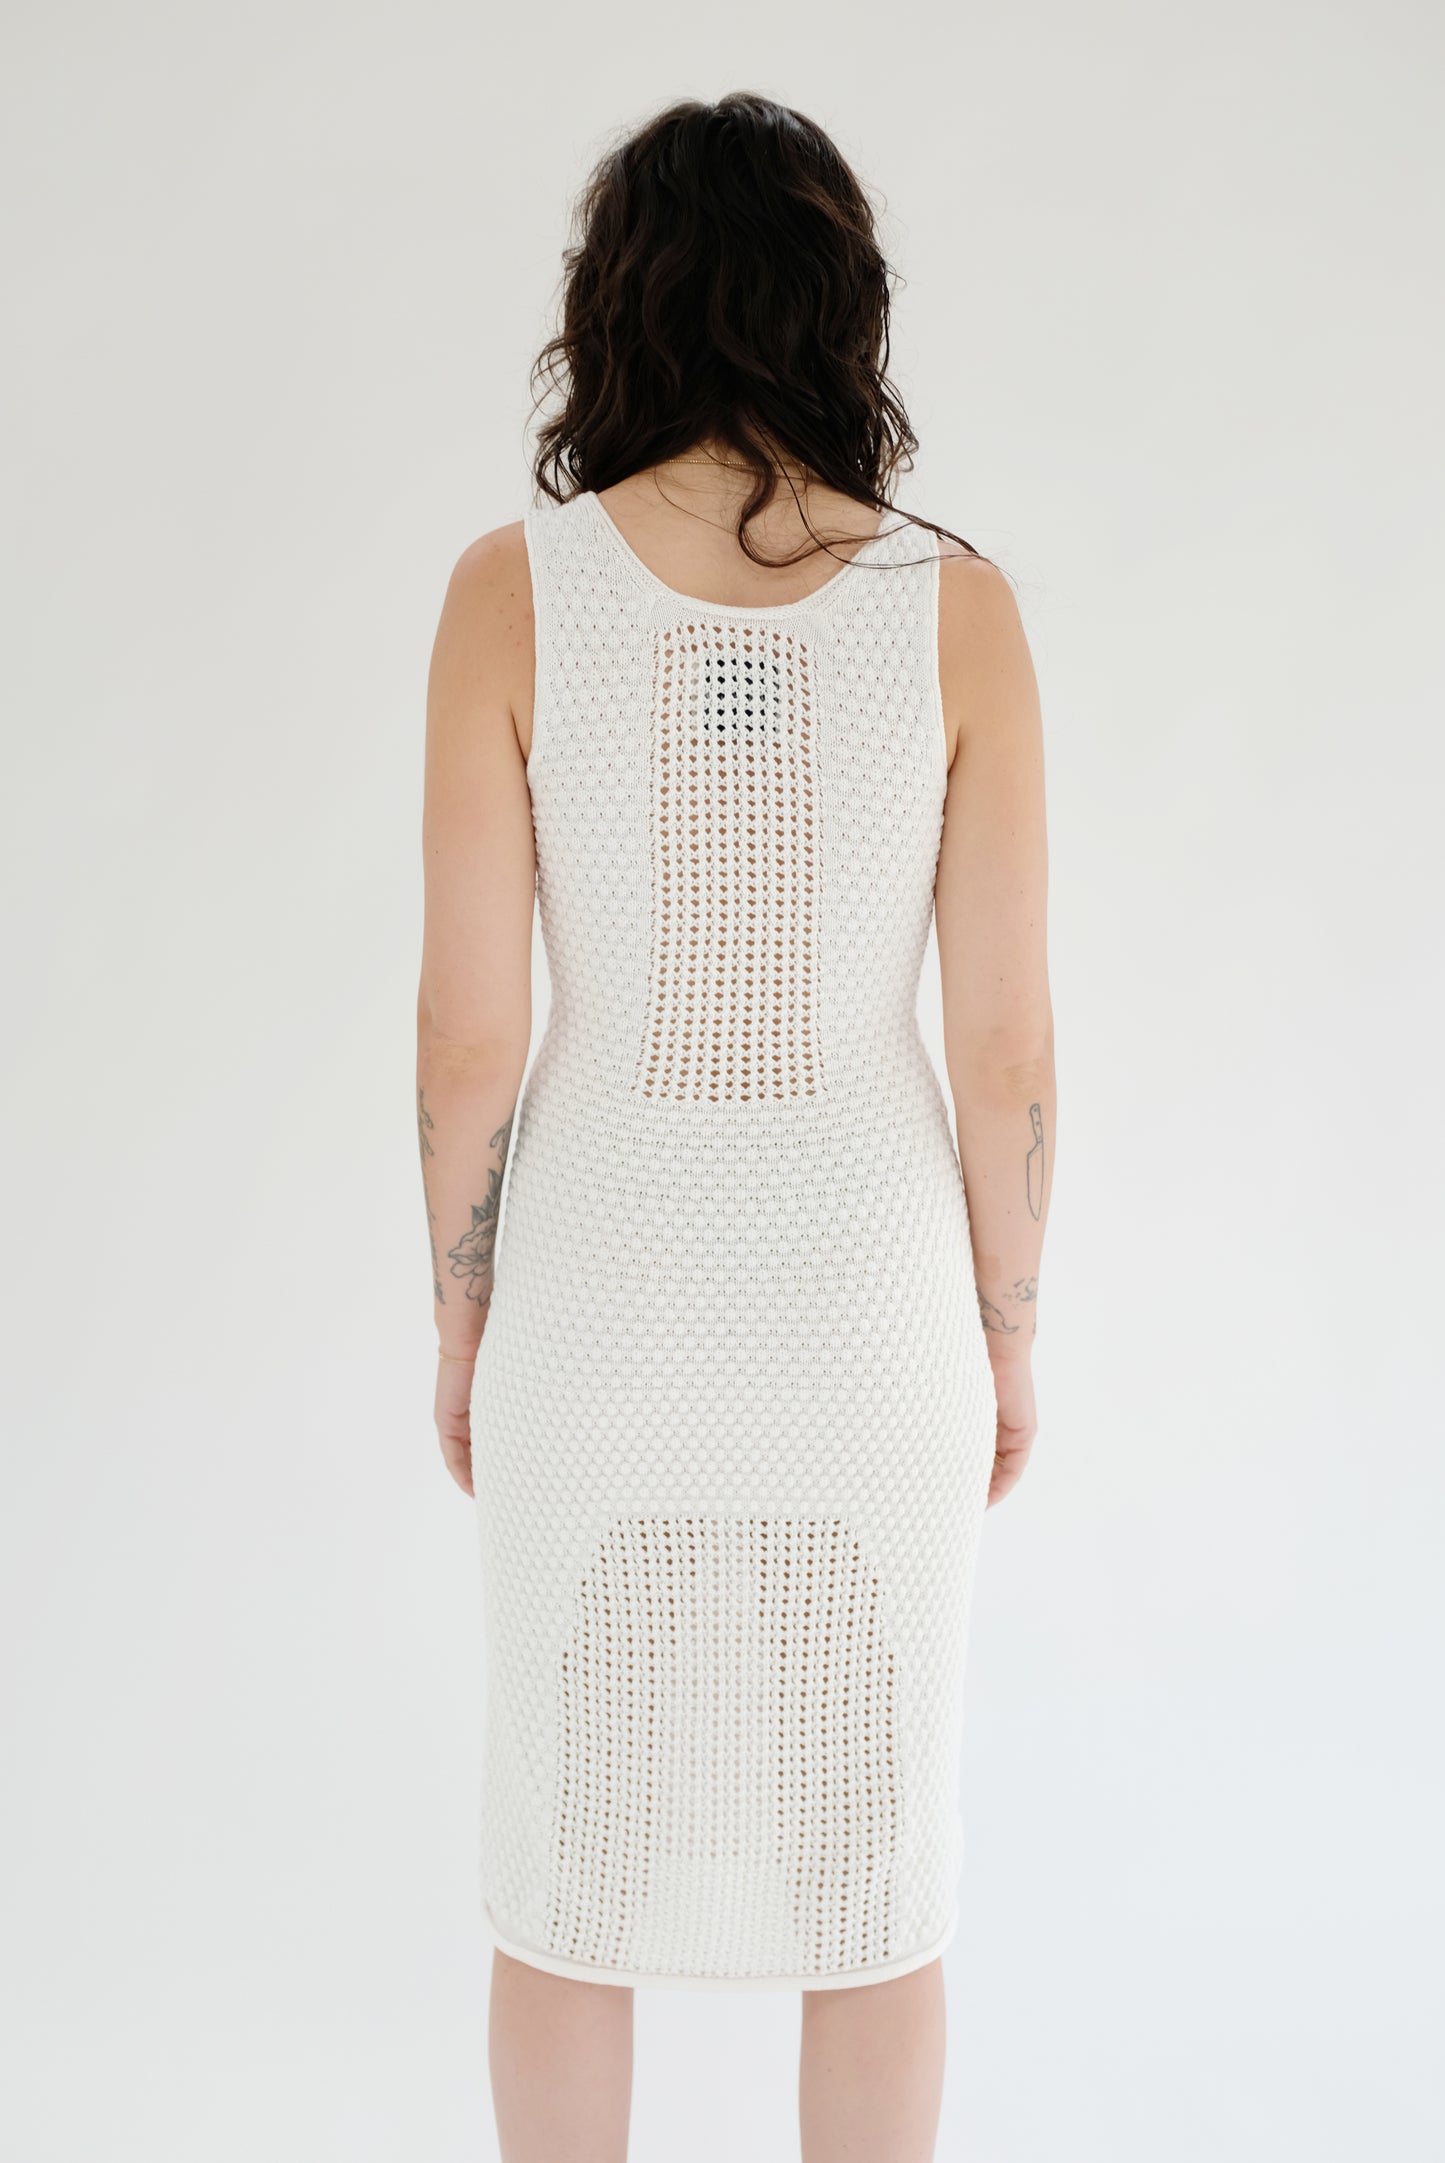 Beklina Haptic Tank Dress Blanca